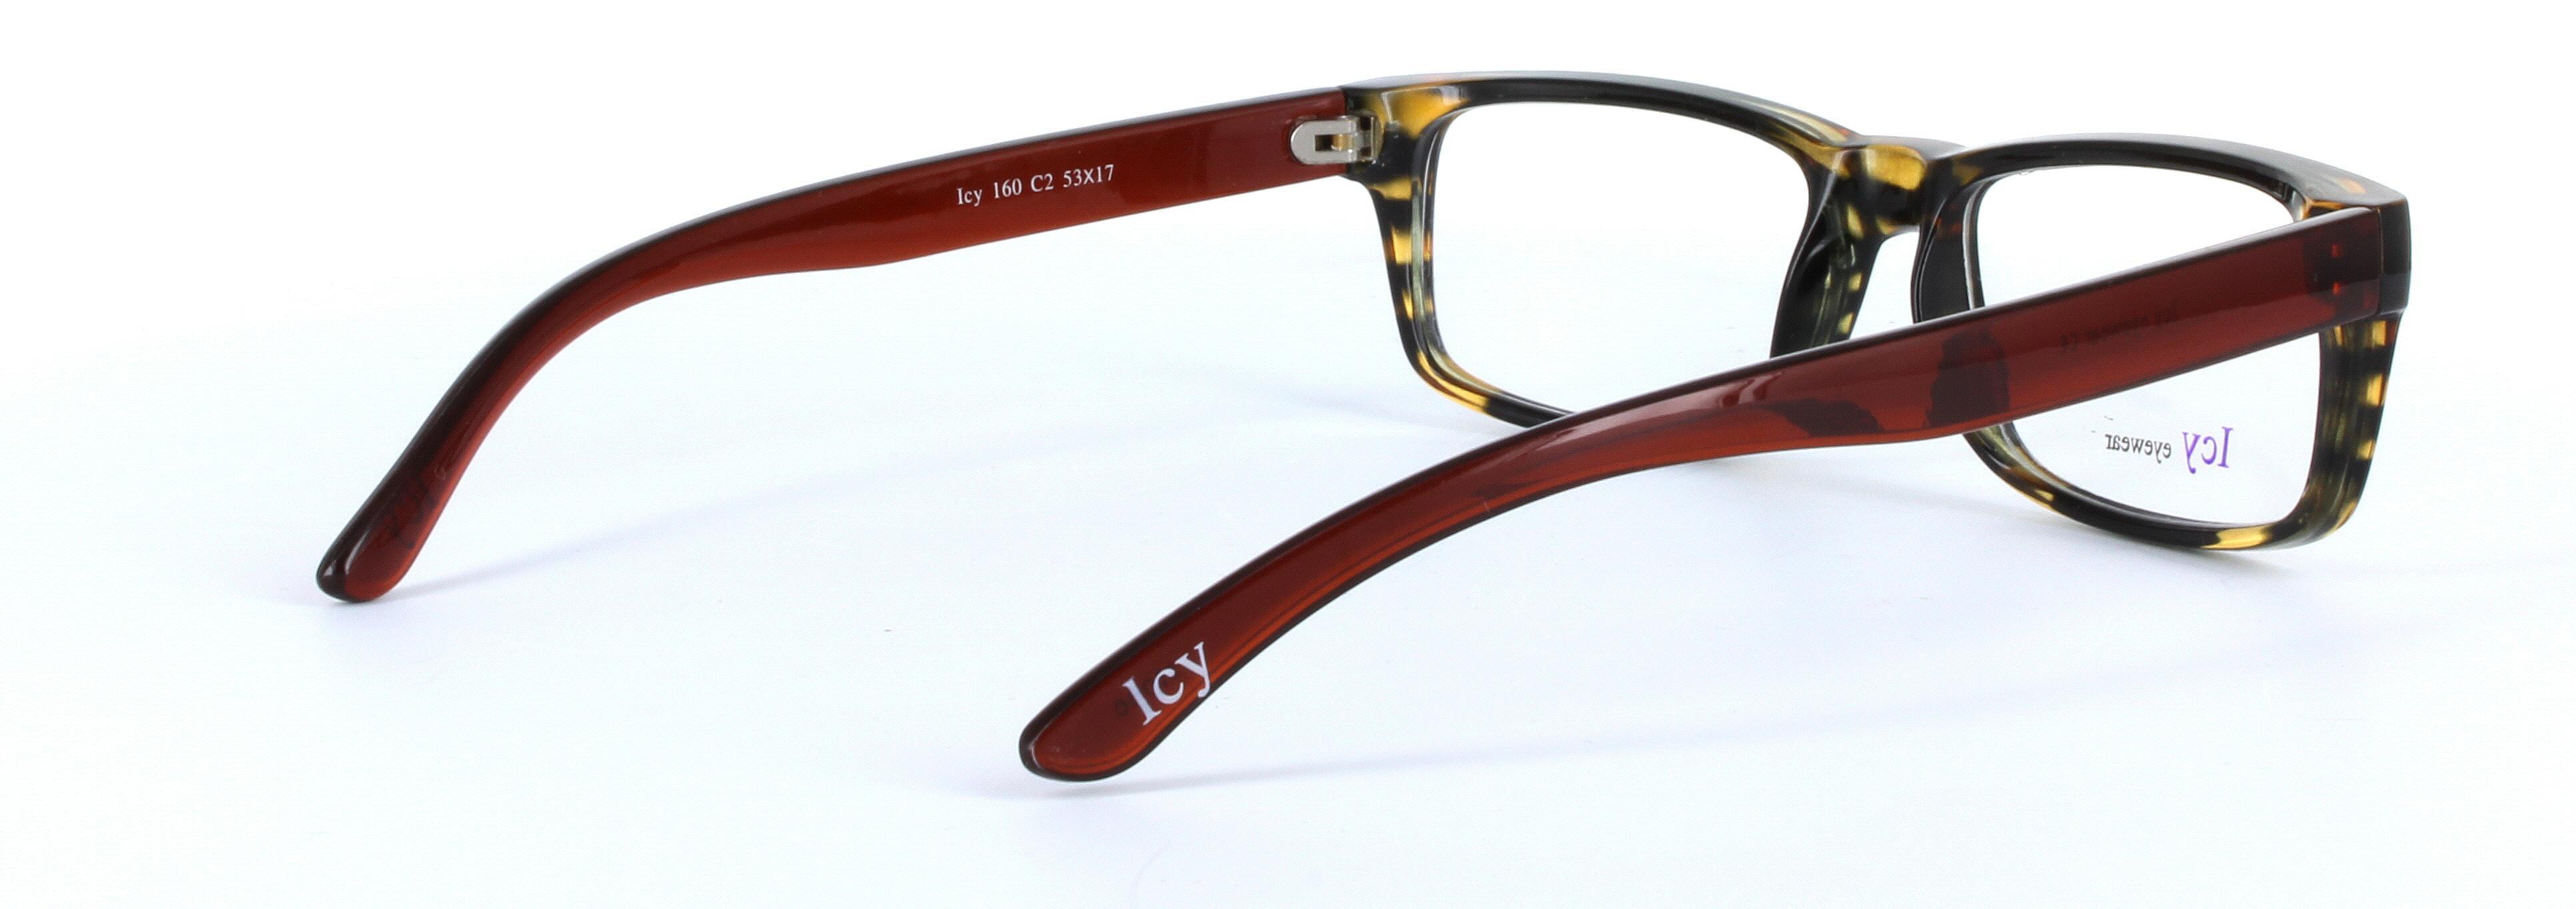 ICY 160 Brown Full Rim Rectangular Square Plastic Glasses - Image View 4